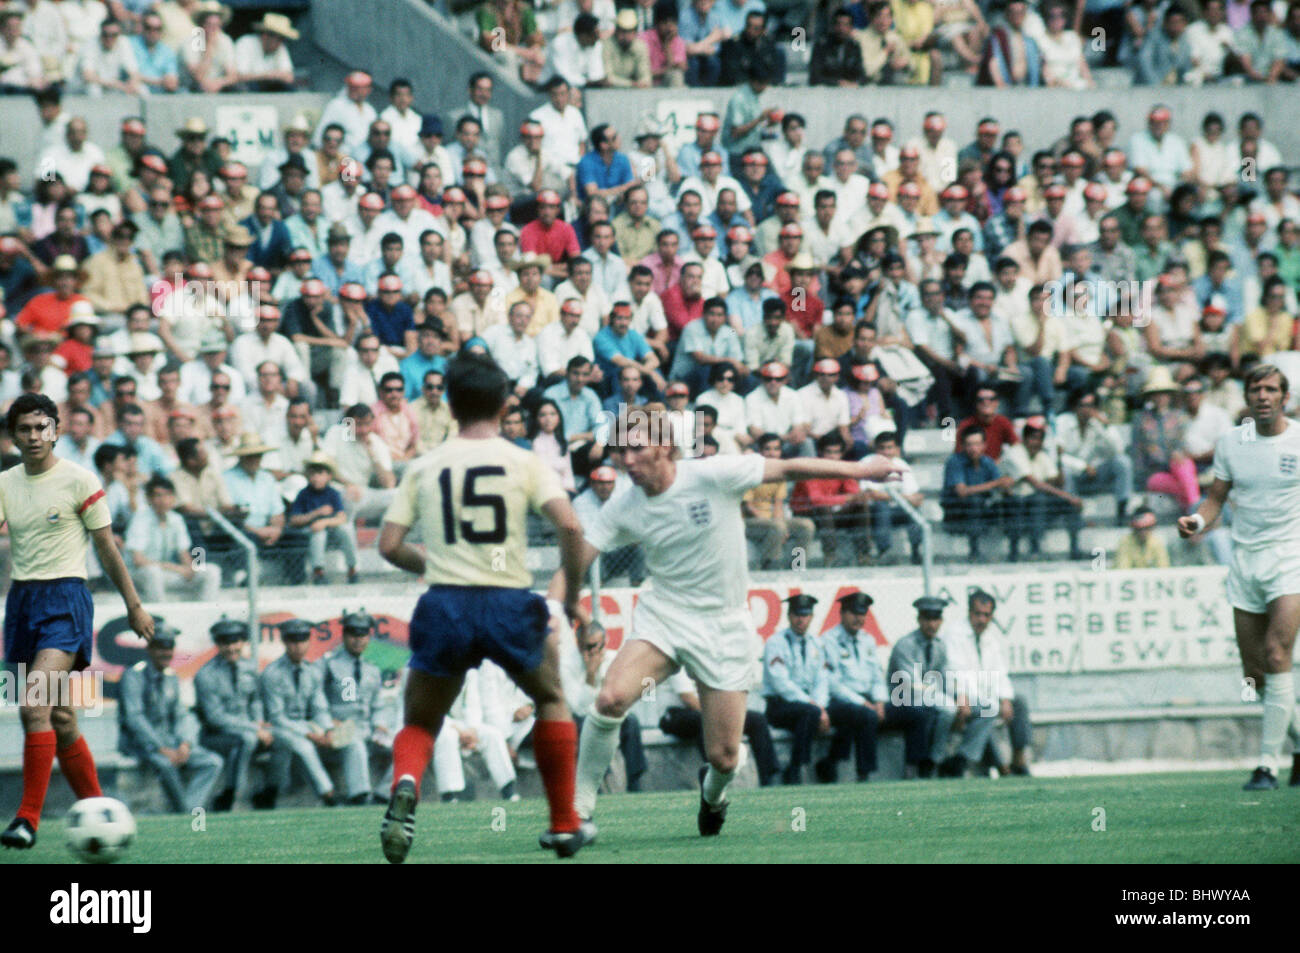 world-cup-1970-group-c-match-england-v-romania-alan-ball-of-england-BHWYAA.jpg